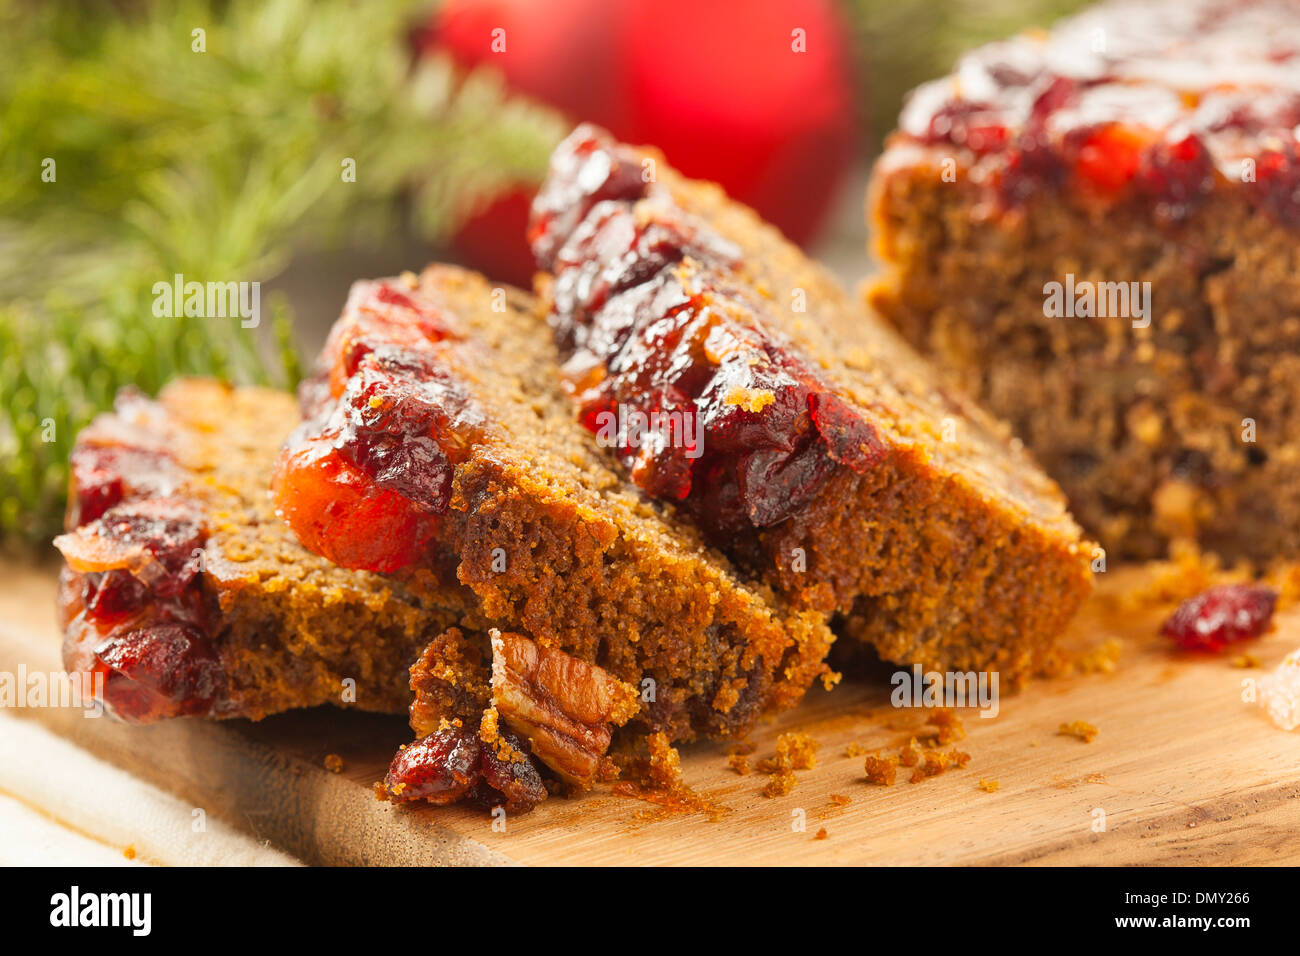 Festive Homemade Holiday Fruitcake with Nuts and Seasoning Stock Photo